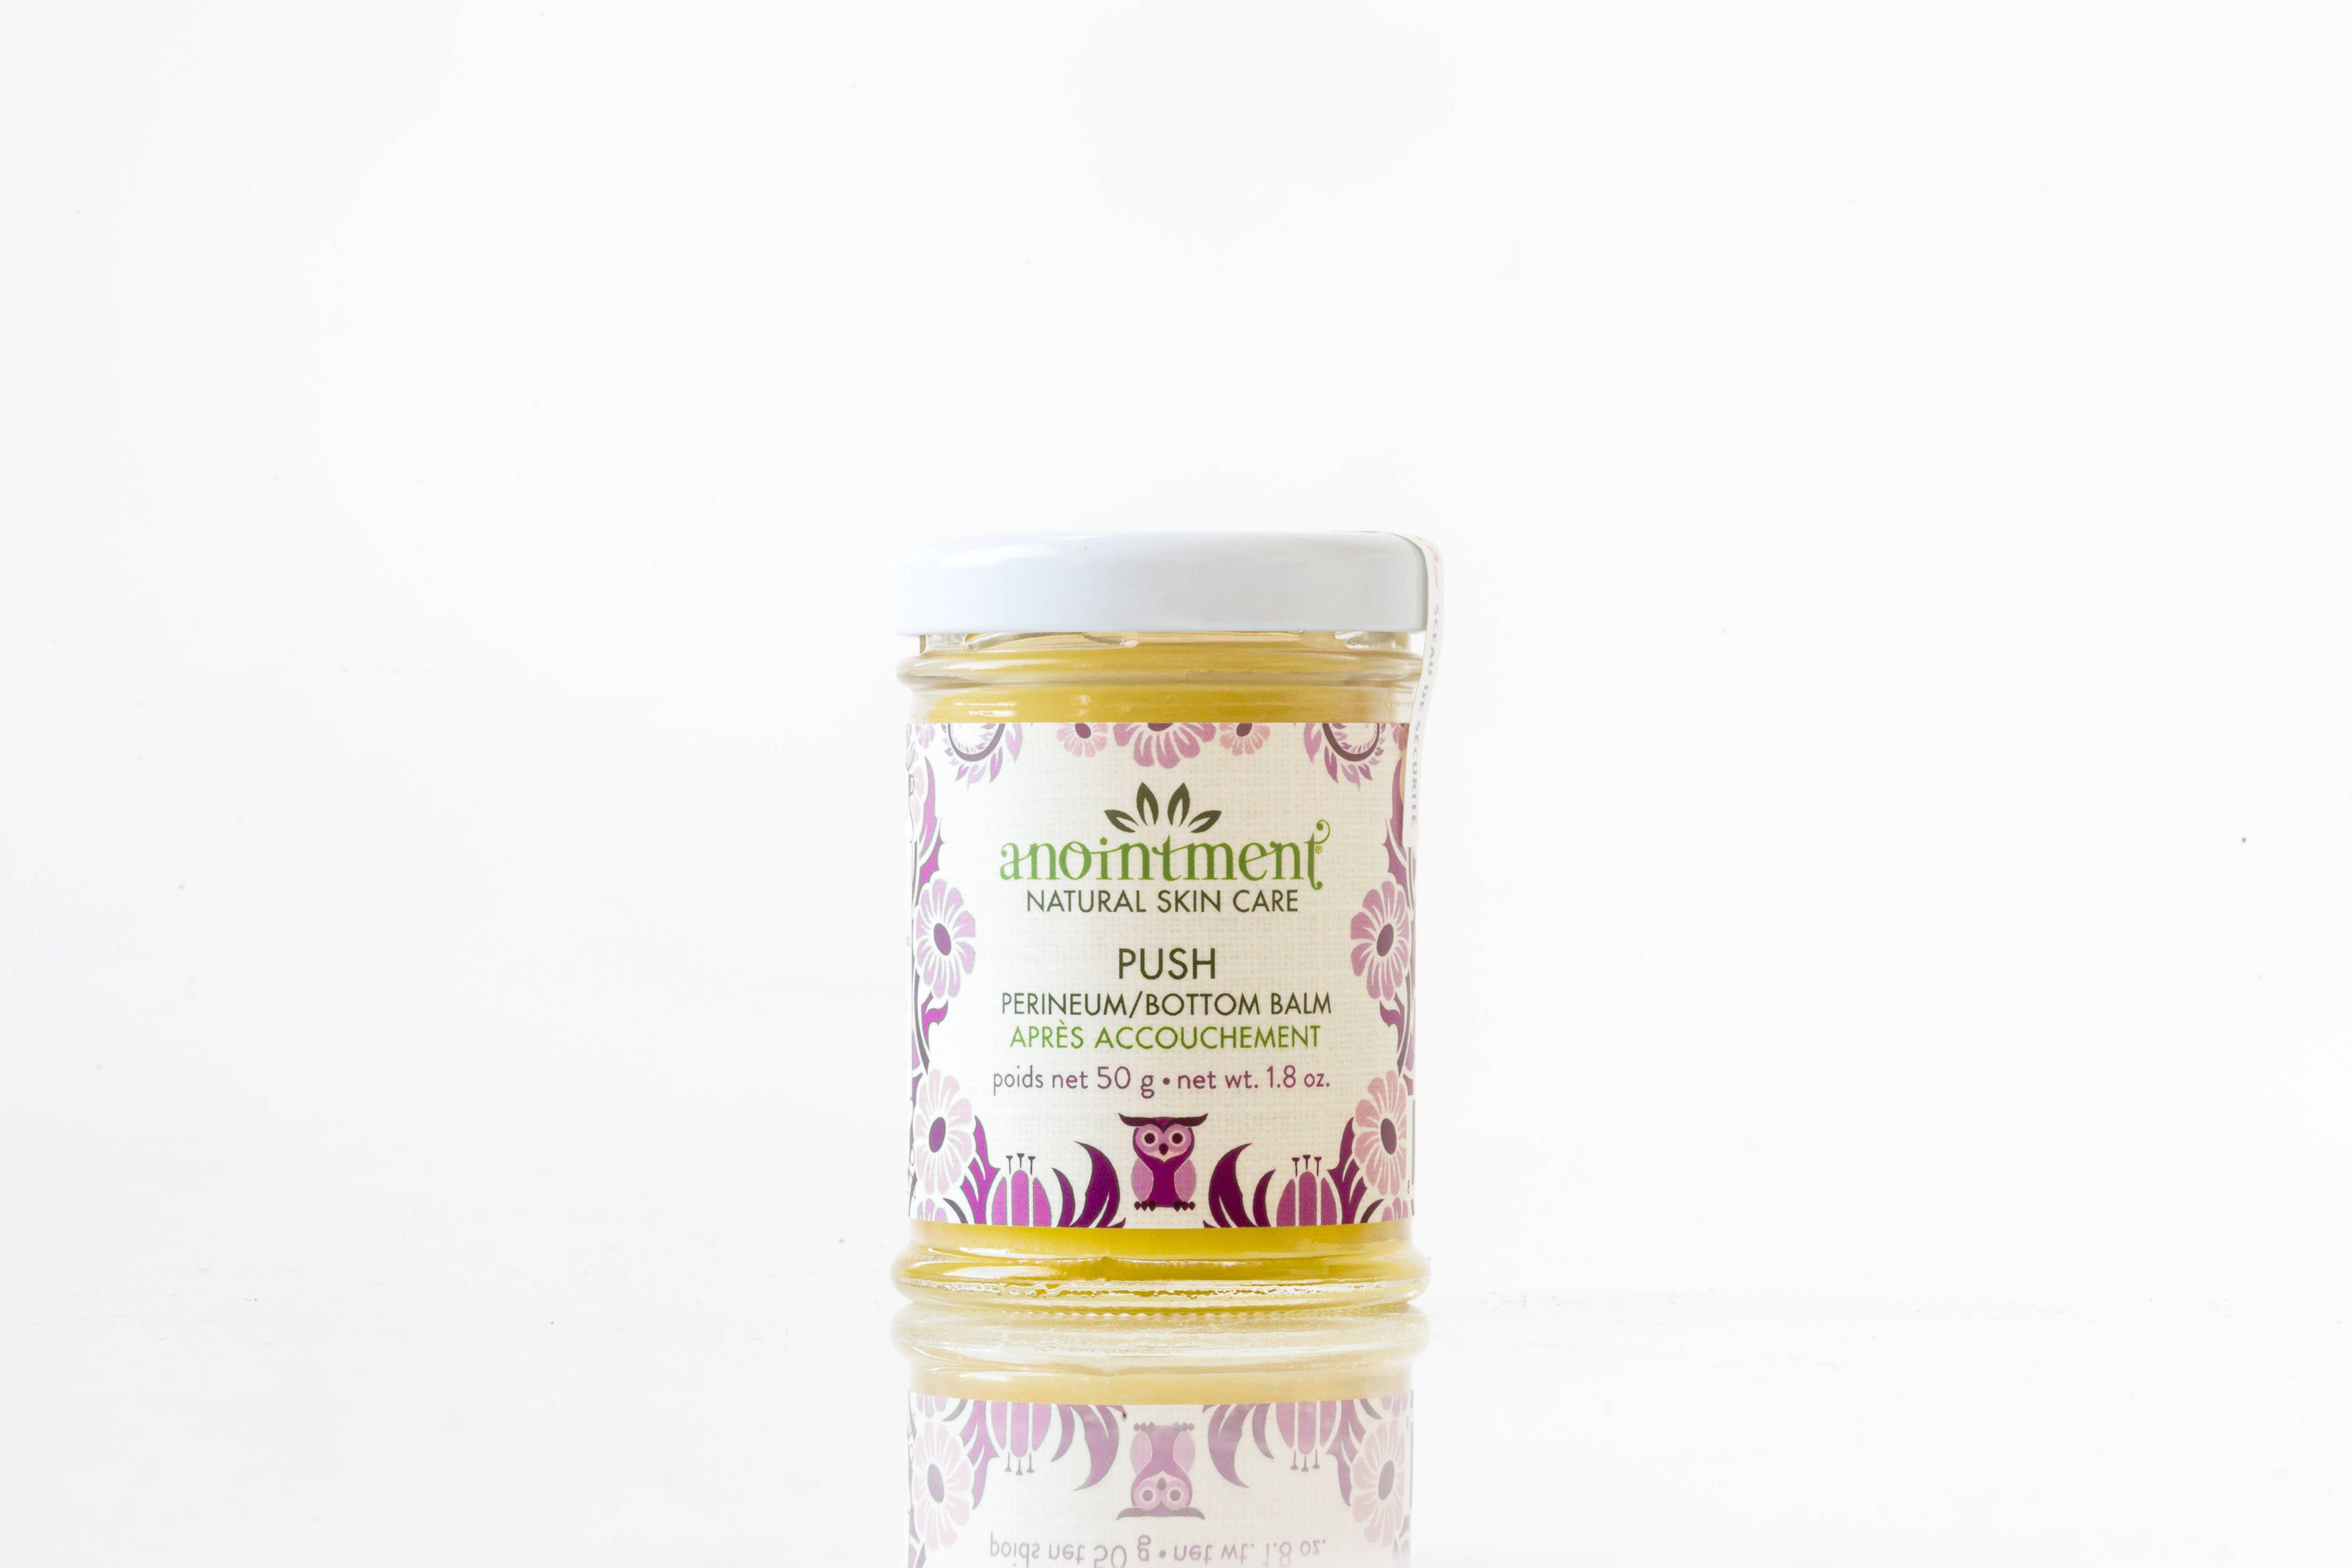 Honey Lavender Magic  Postpartum Perineal Healing Ointment